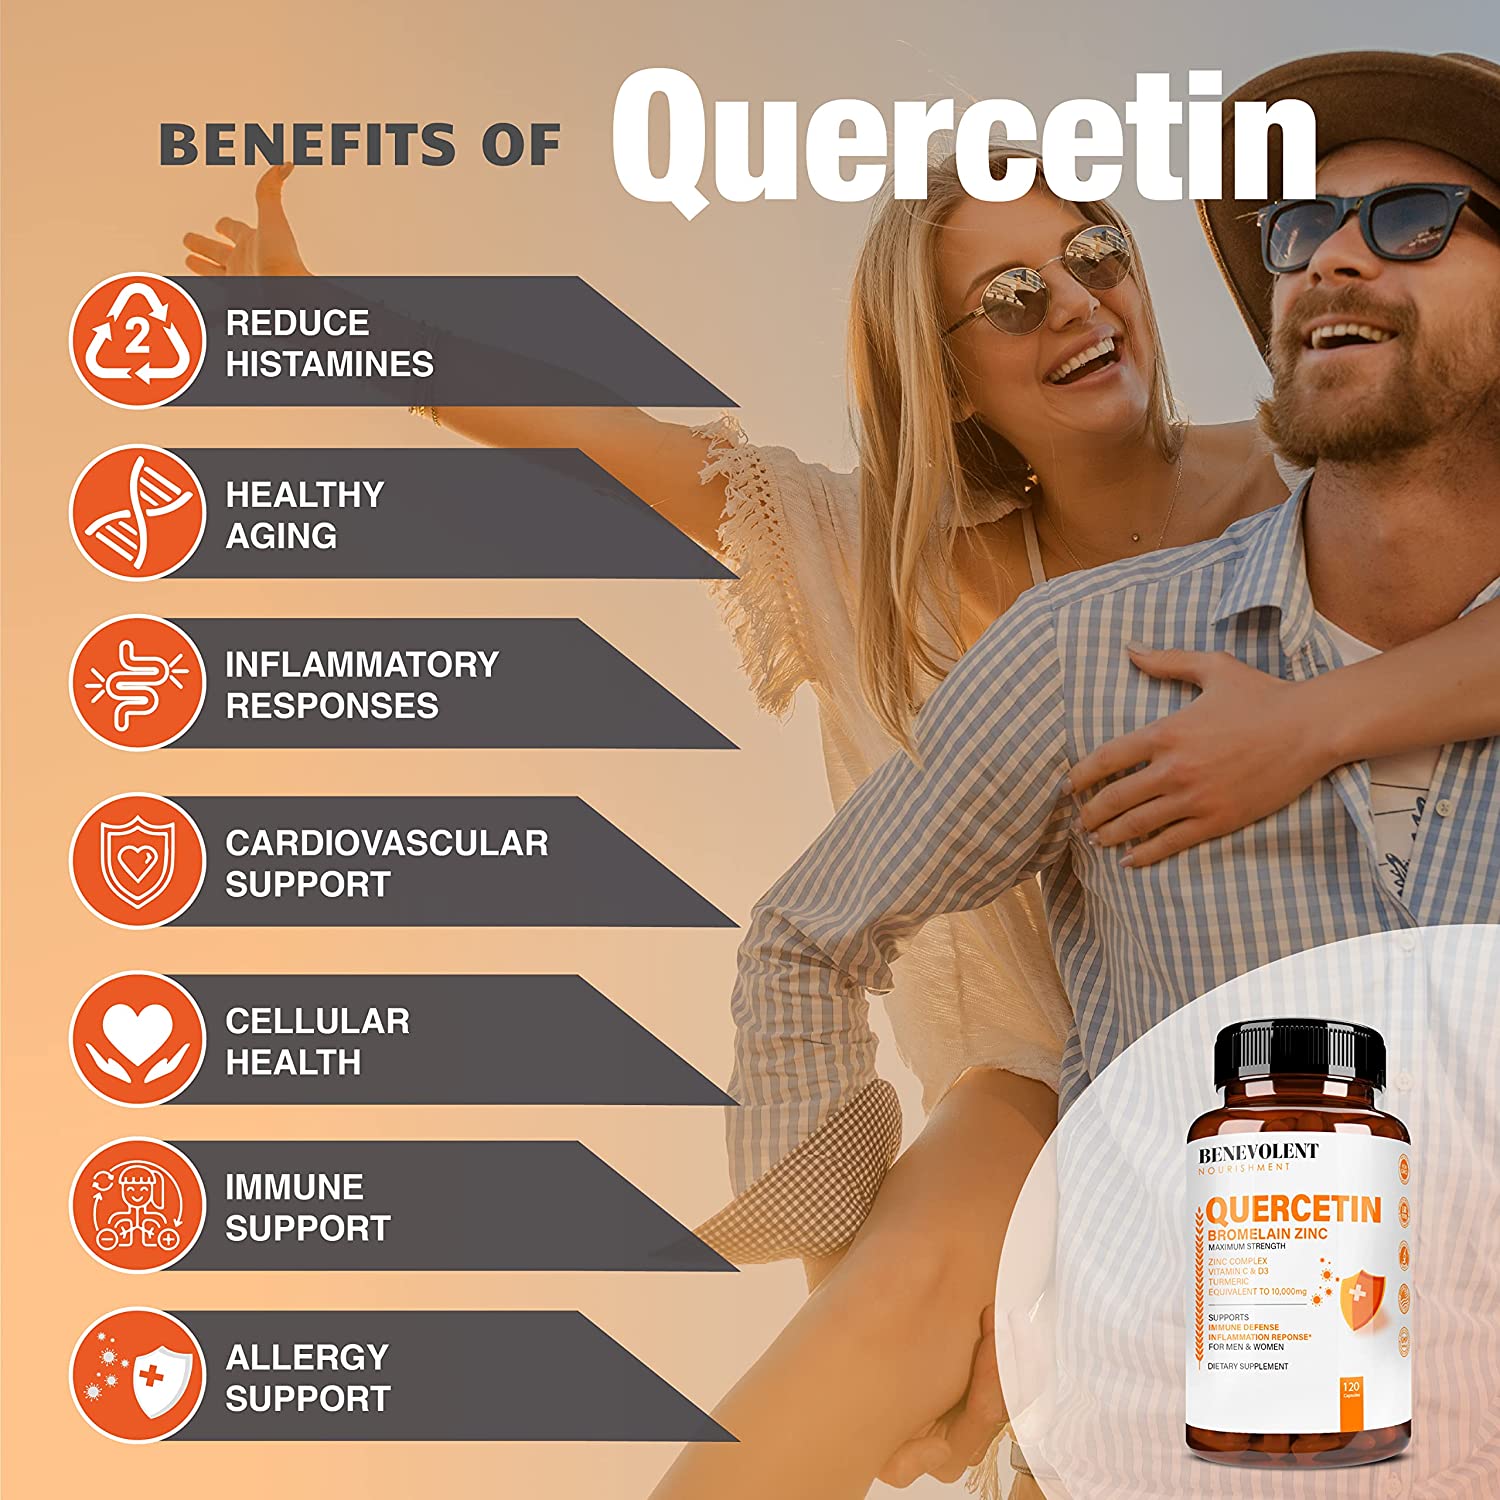 Quercetin benefits